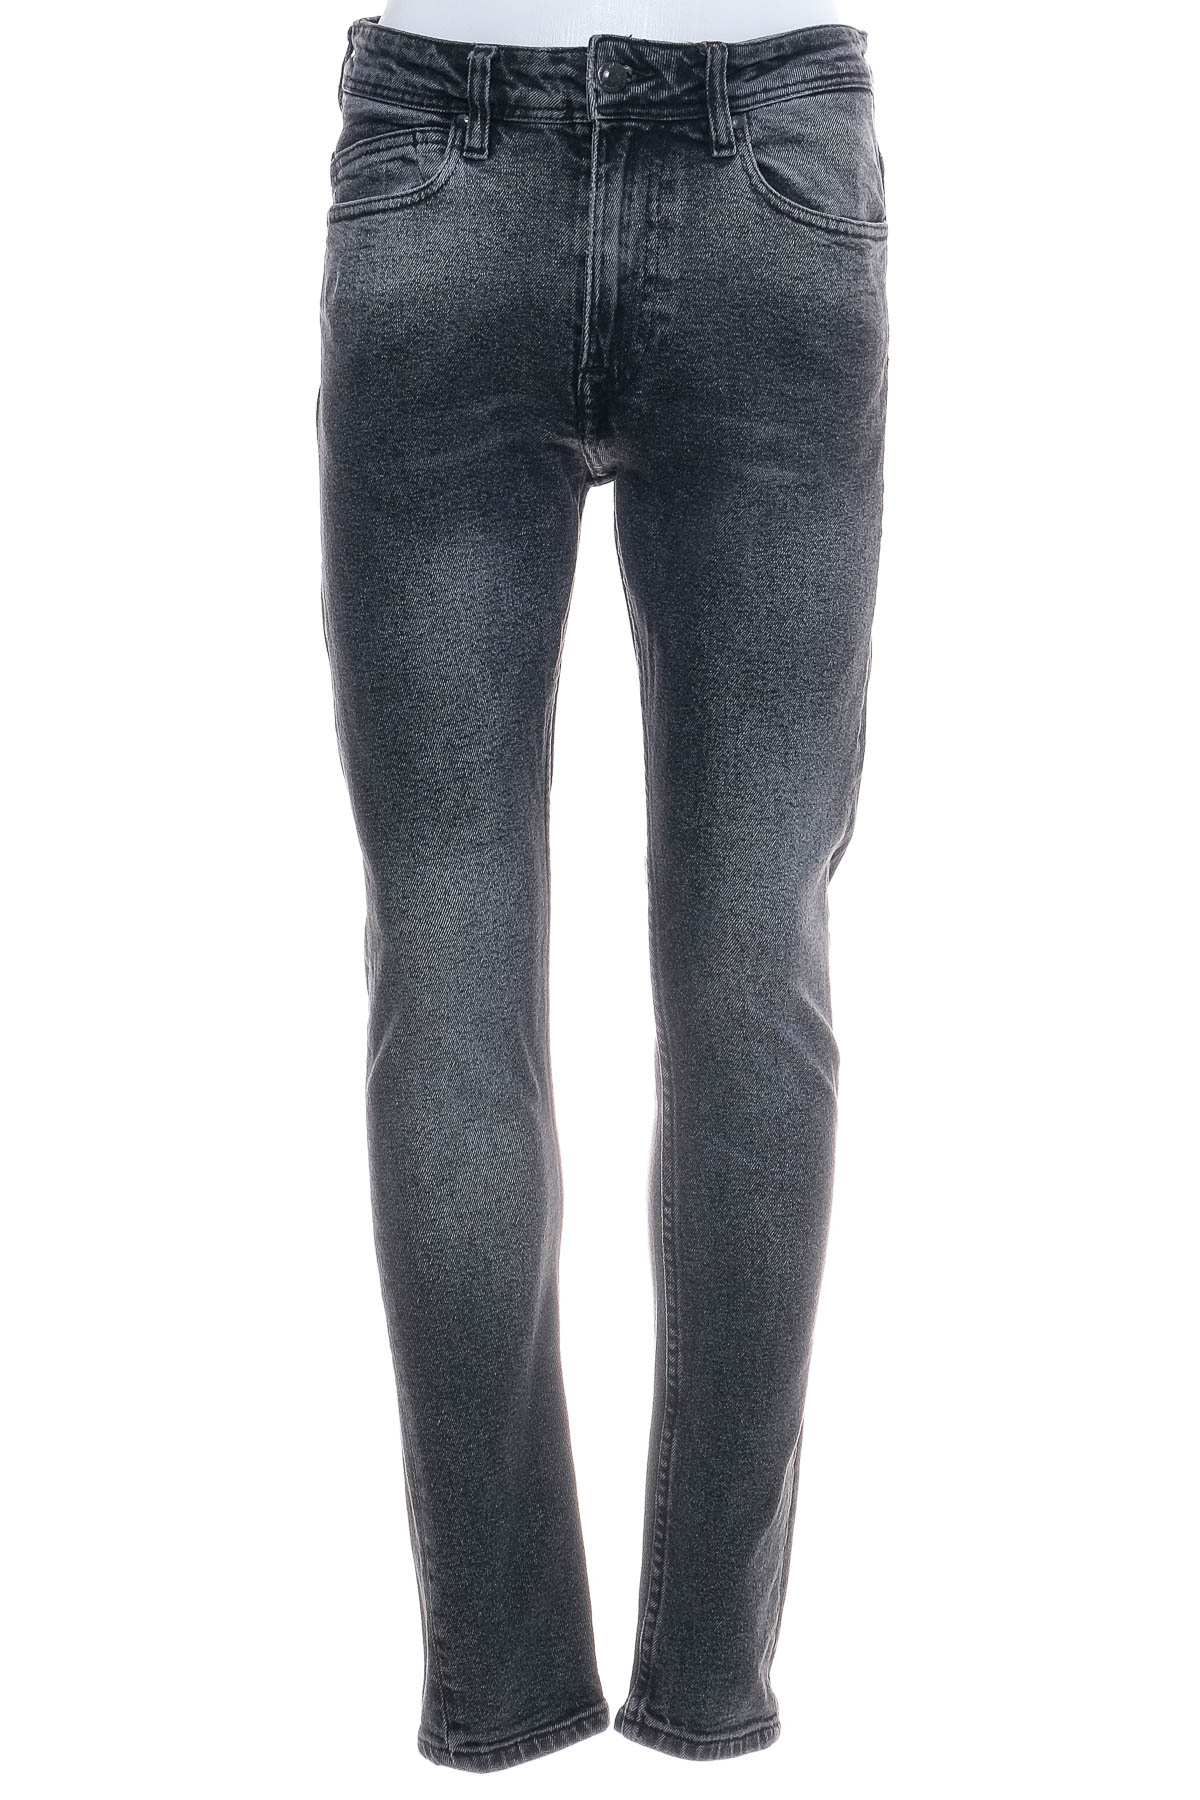 Men's jeans - ZARA Man - 0